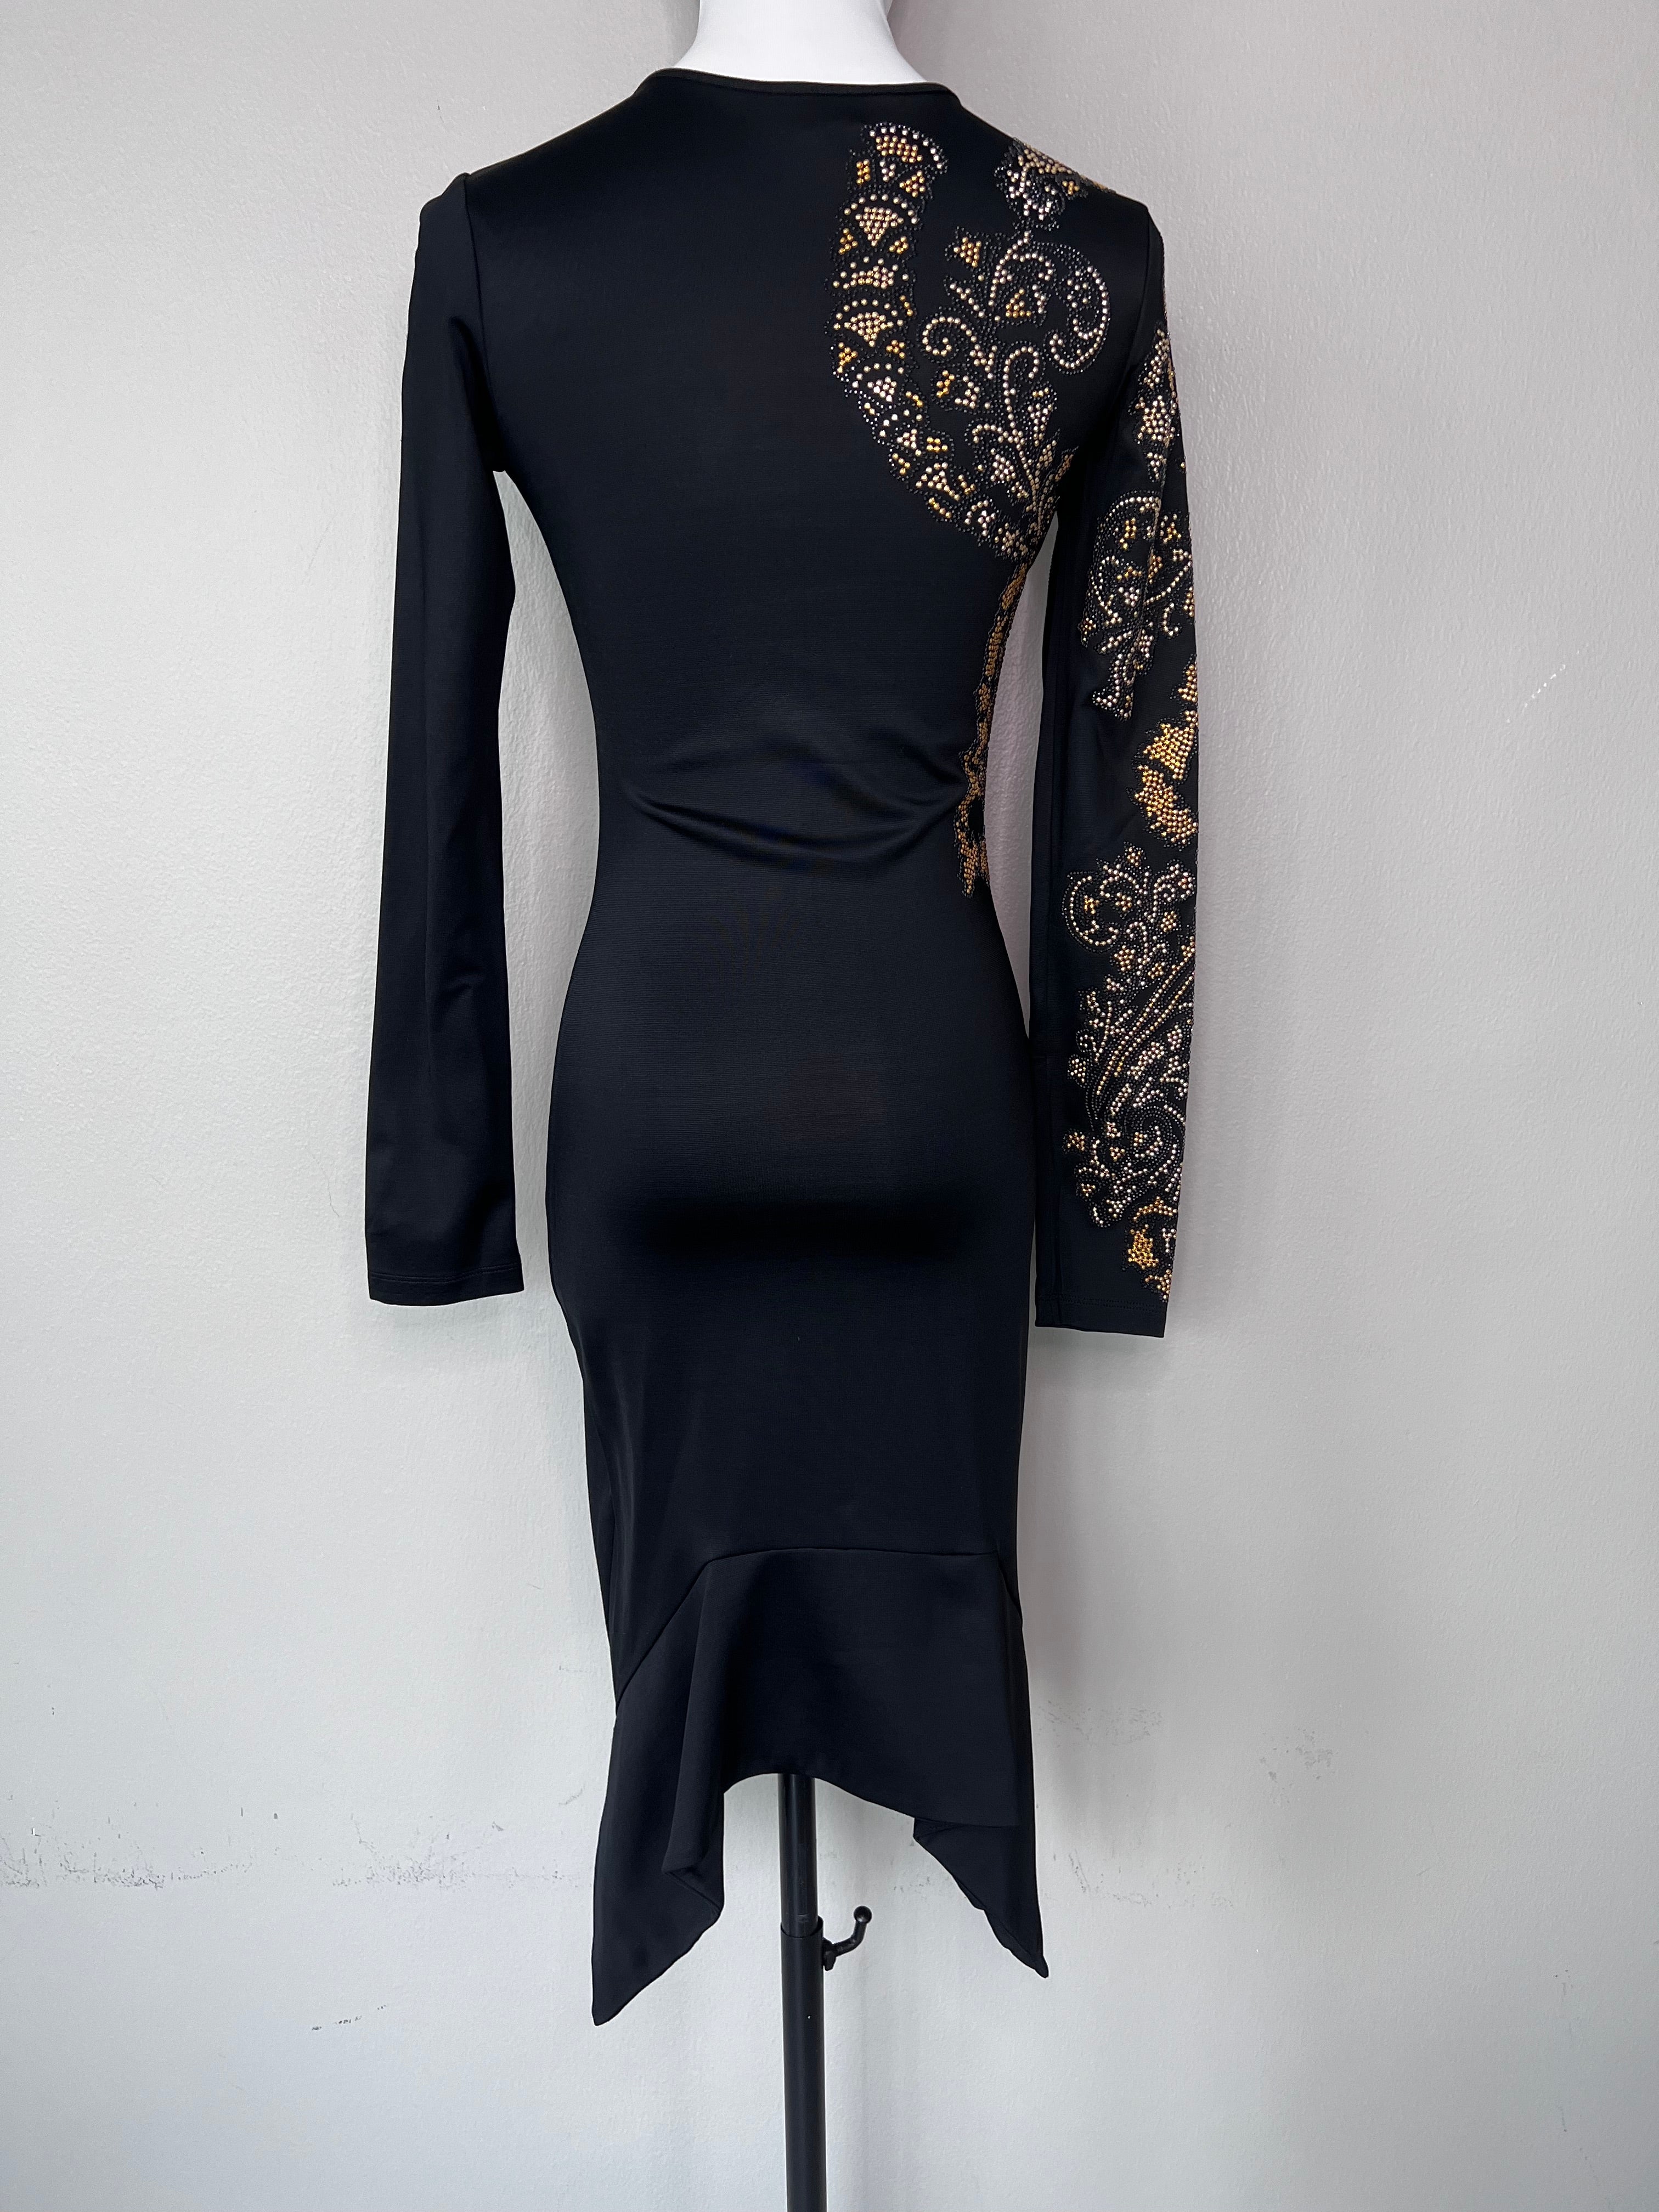 long sleeves black bodycon dress - justcavalli